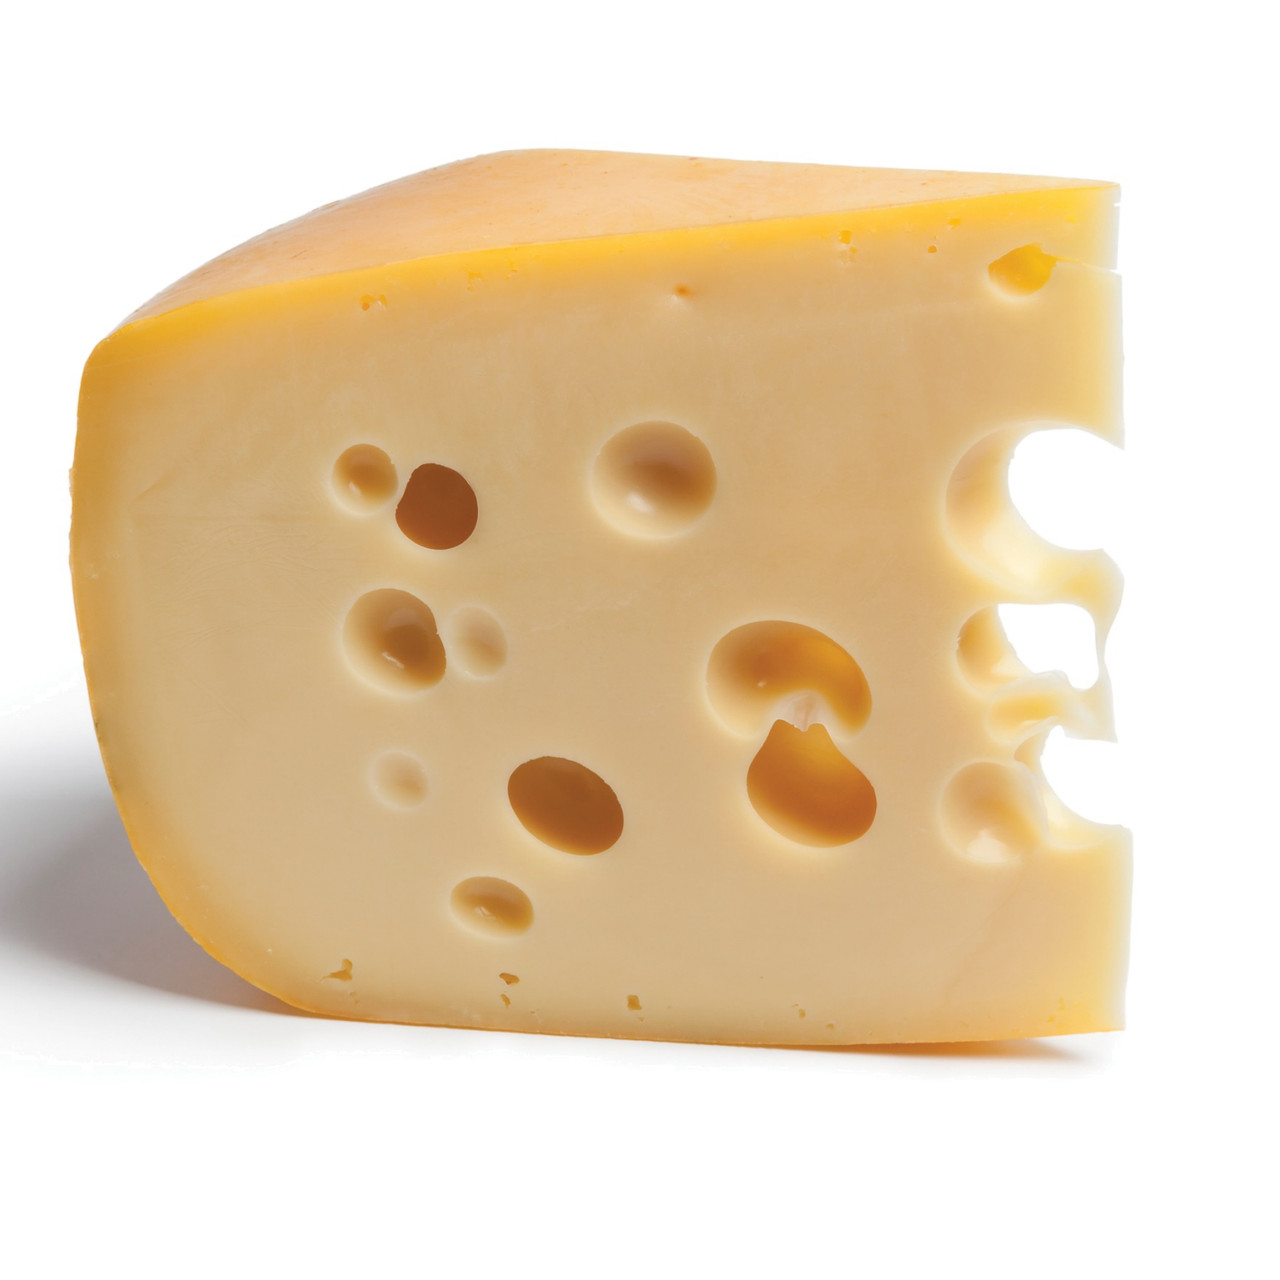 Масдамер 45% ~2,7 кг. сыр твёрдый ТМ Мелодия вкуса, вес. /кор.6 шт.